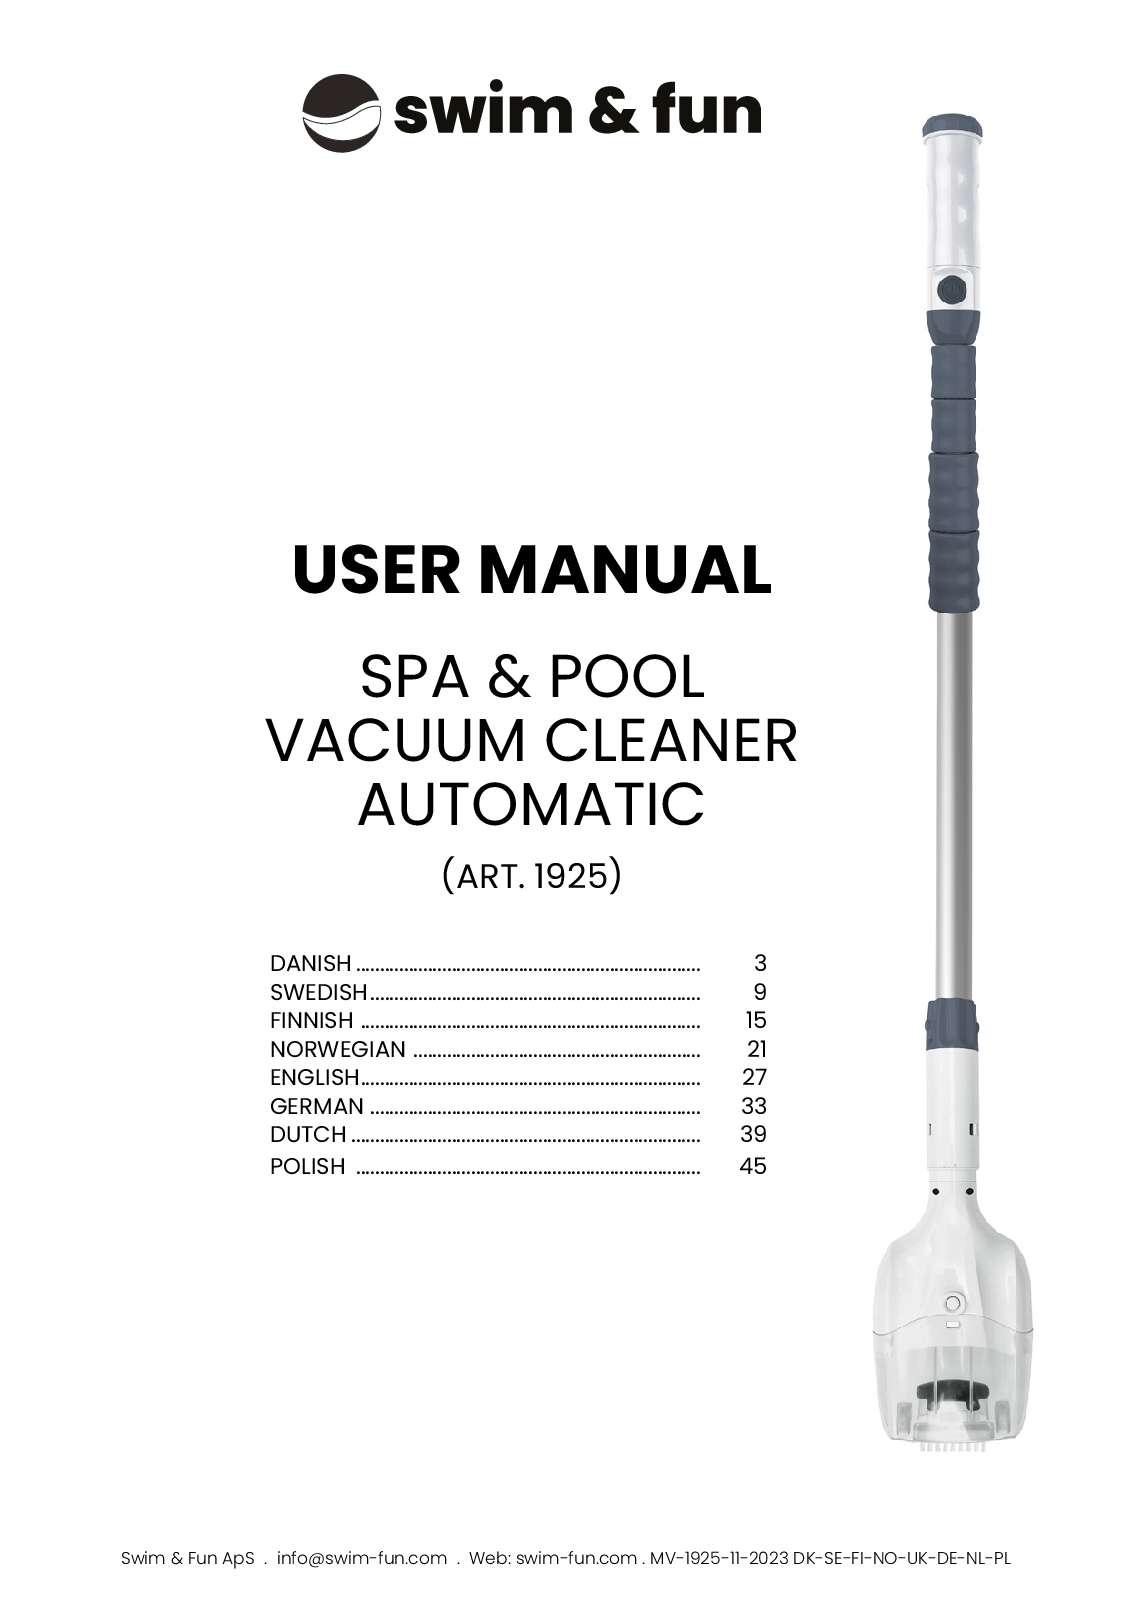 MV 1925 Spa Pool Automatic Cleaner Manual 11 2023 V2 PR